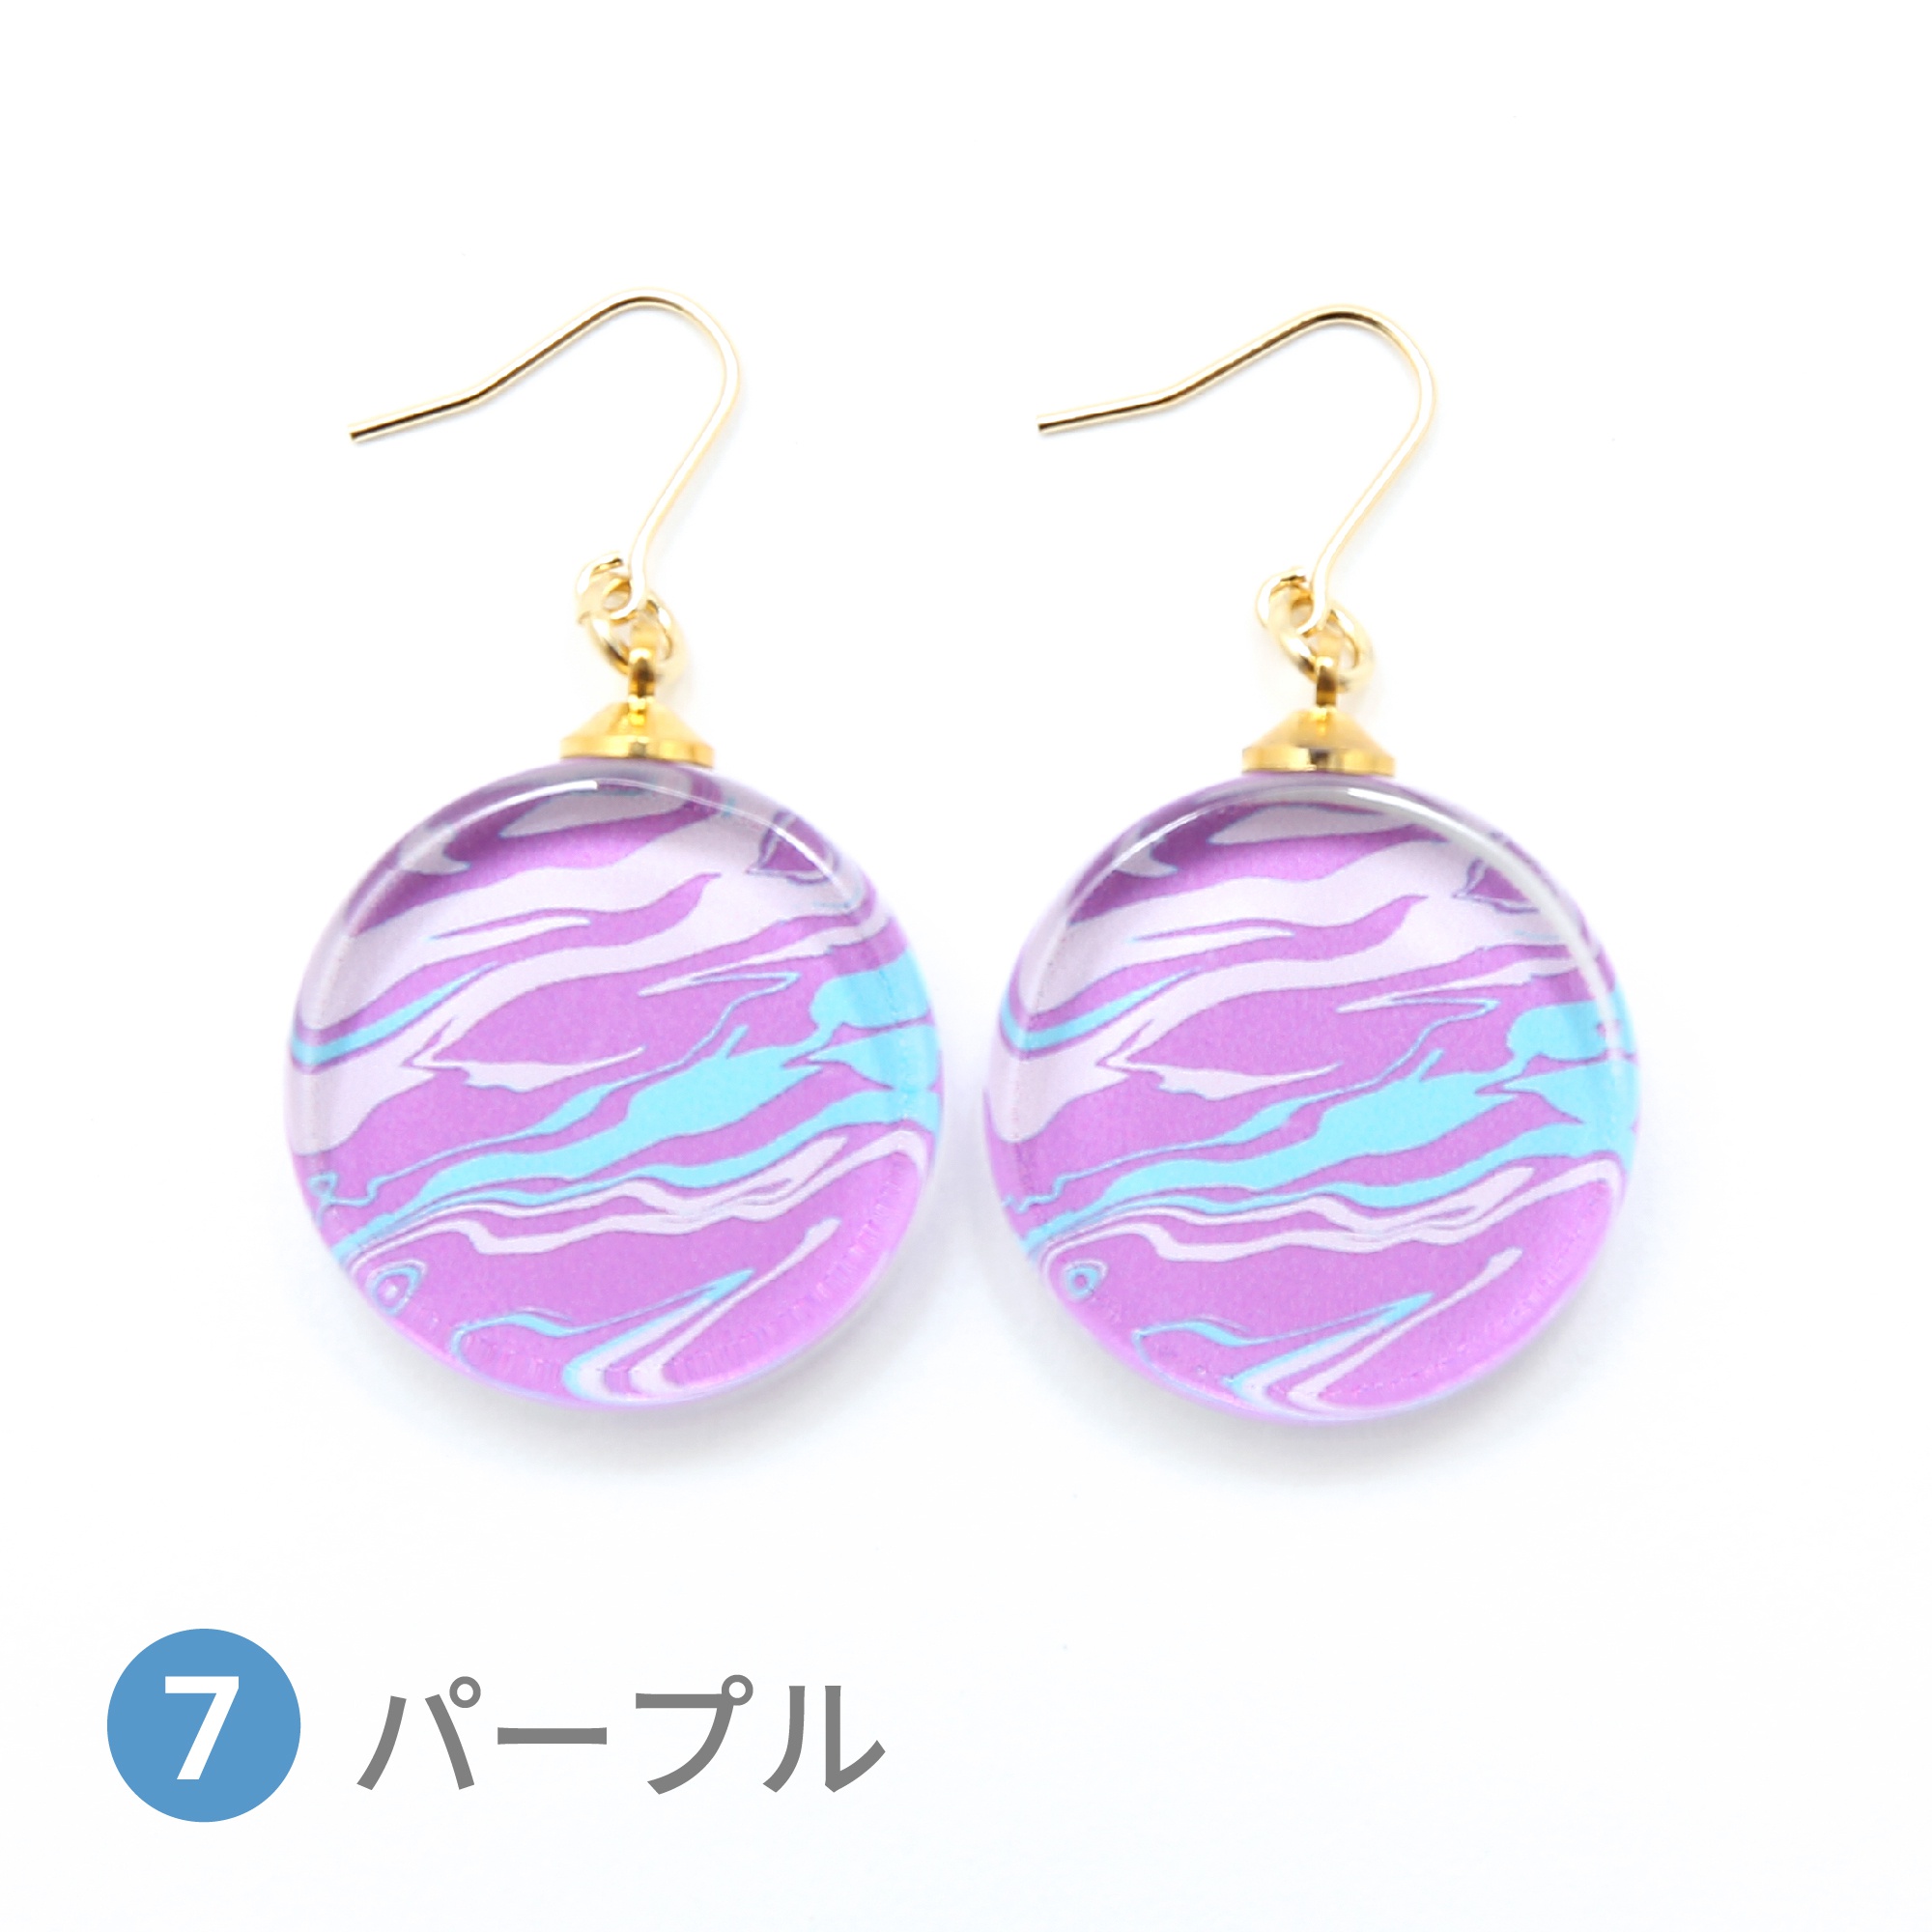 Glass accessories Pierced Earring MARBLE purple round shape